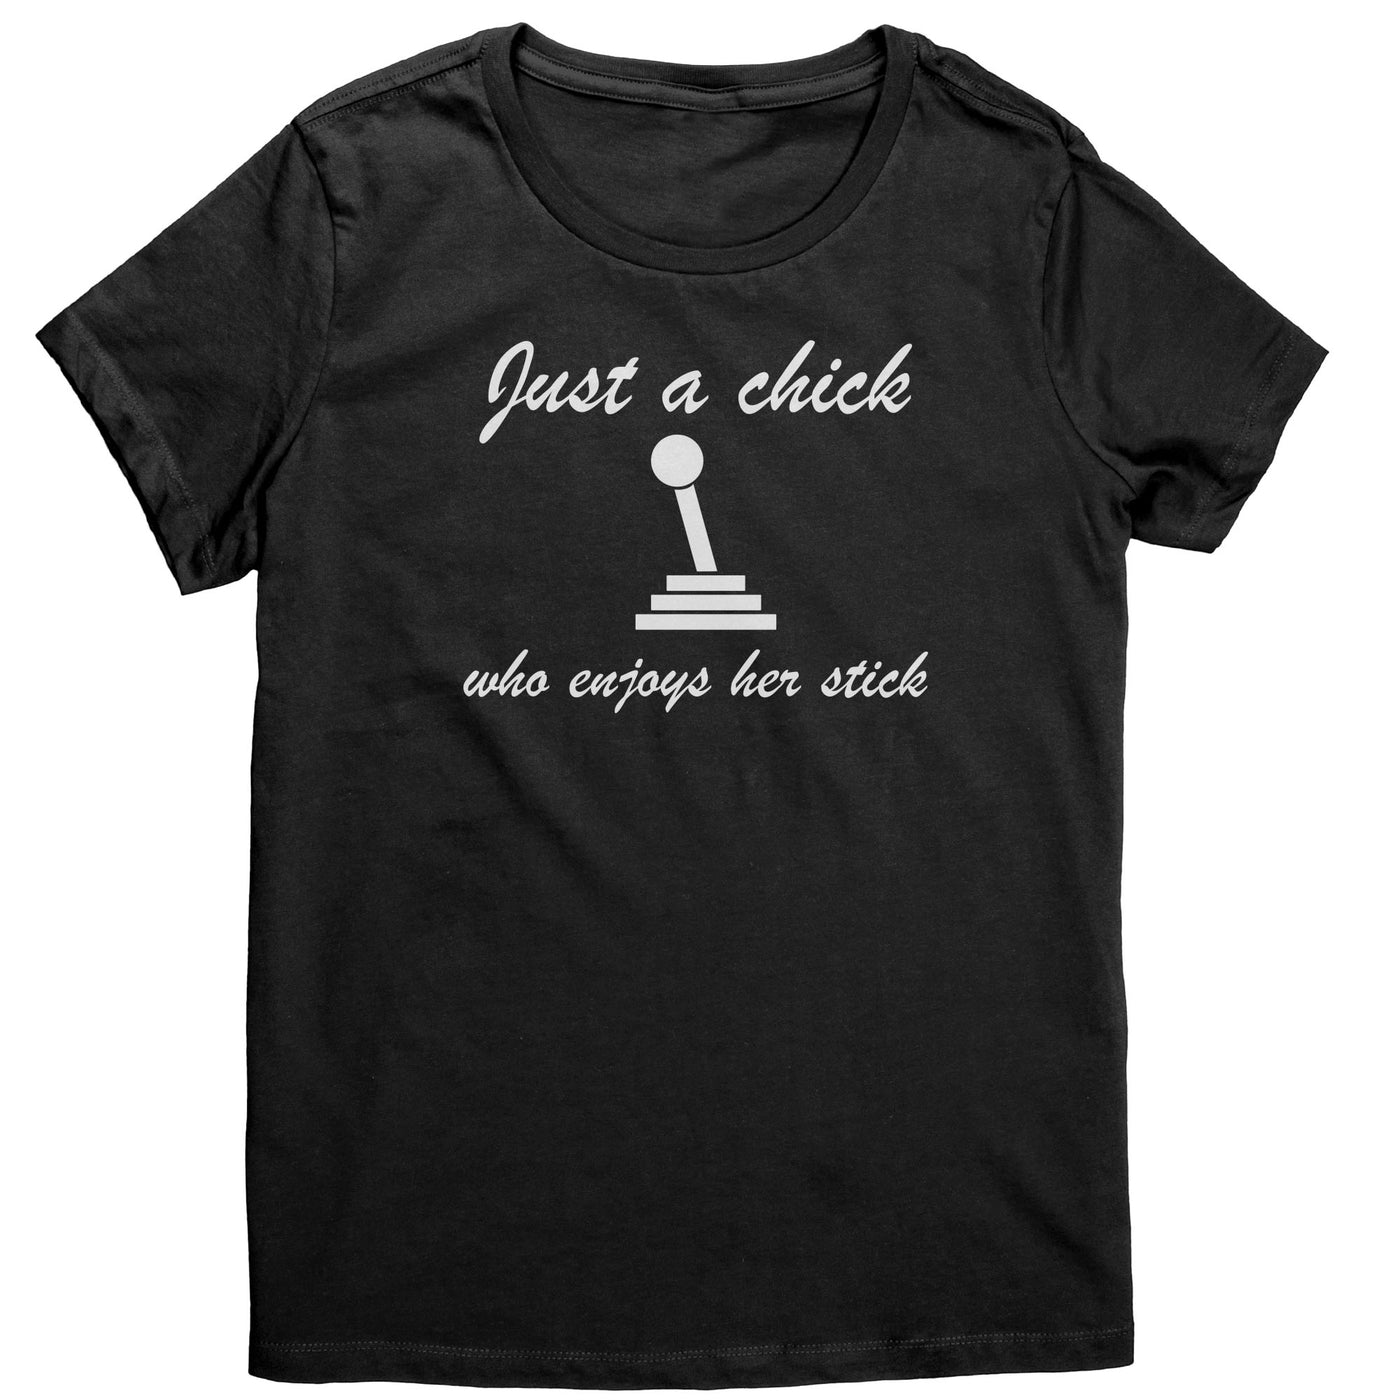 just-a-chick-who-enjoys-her-stick-shirt-black